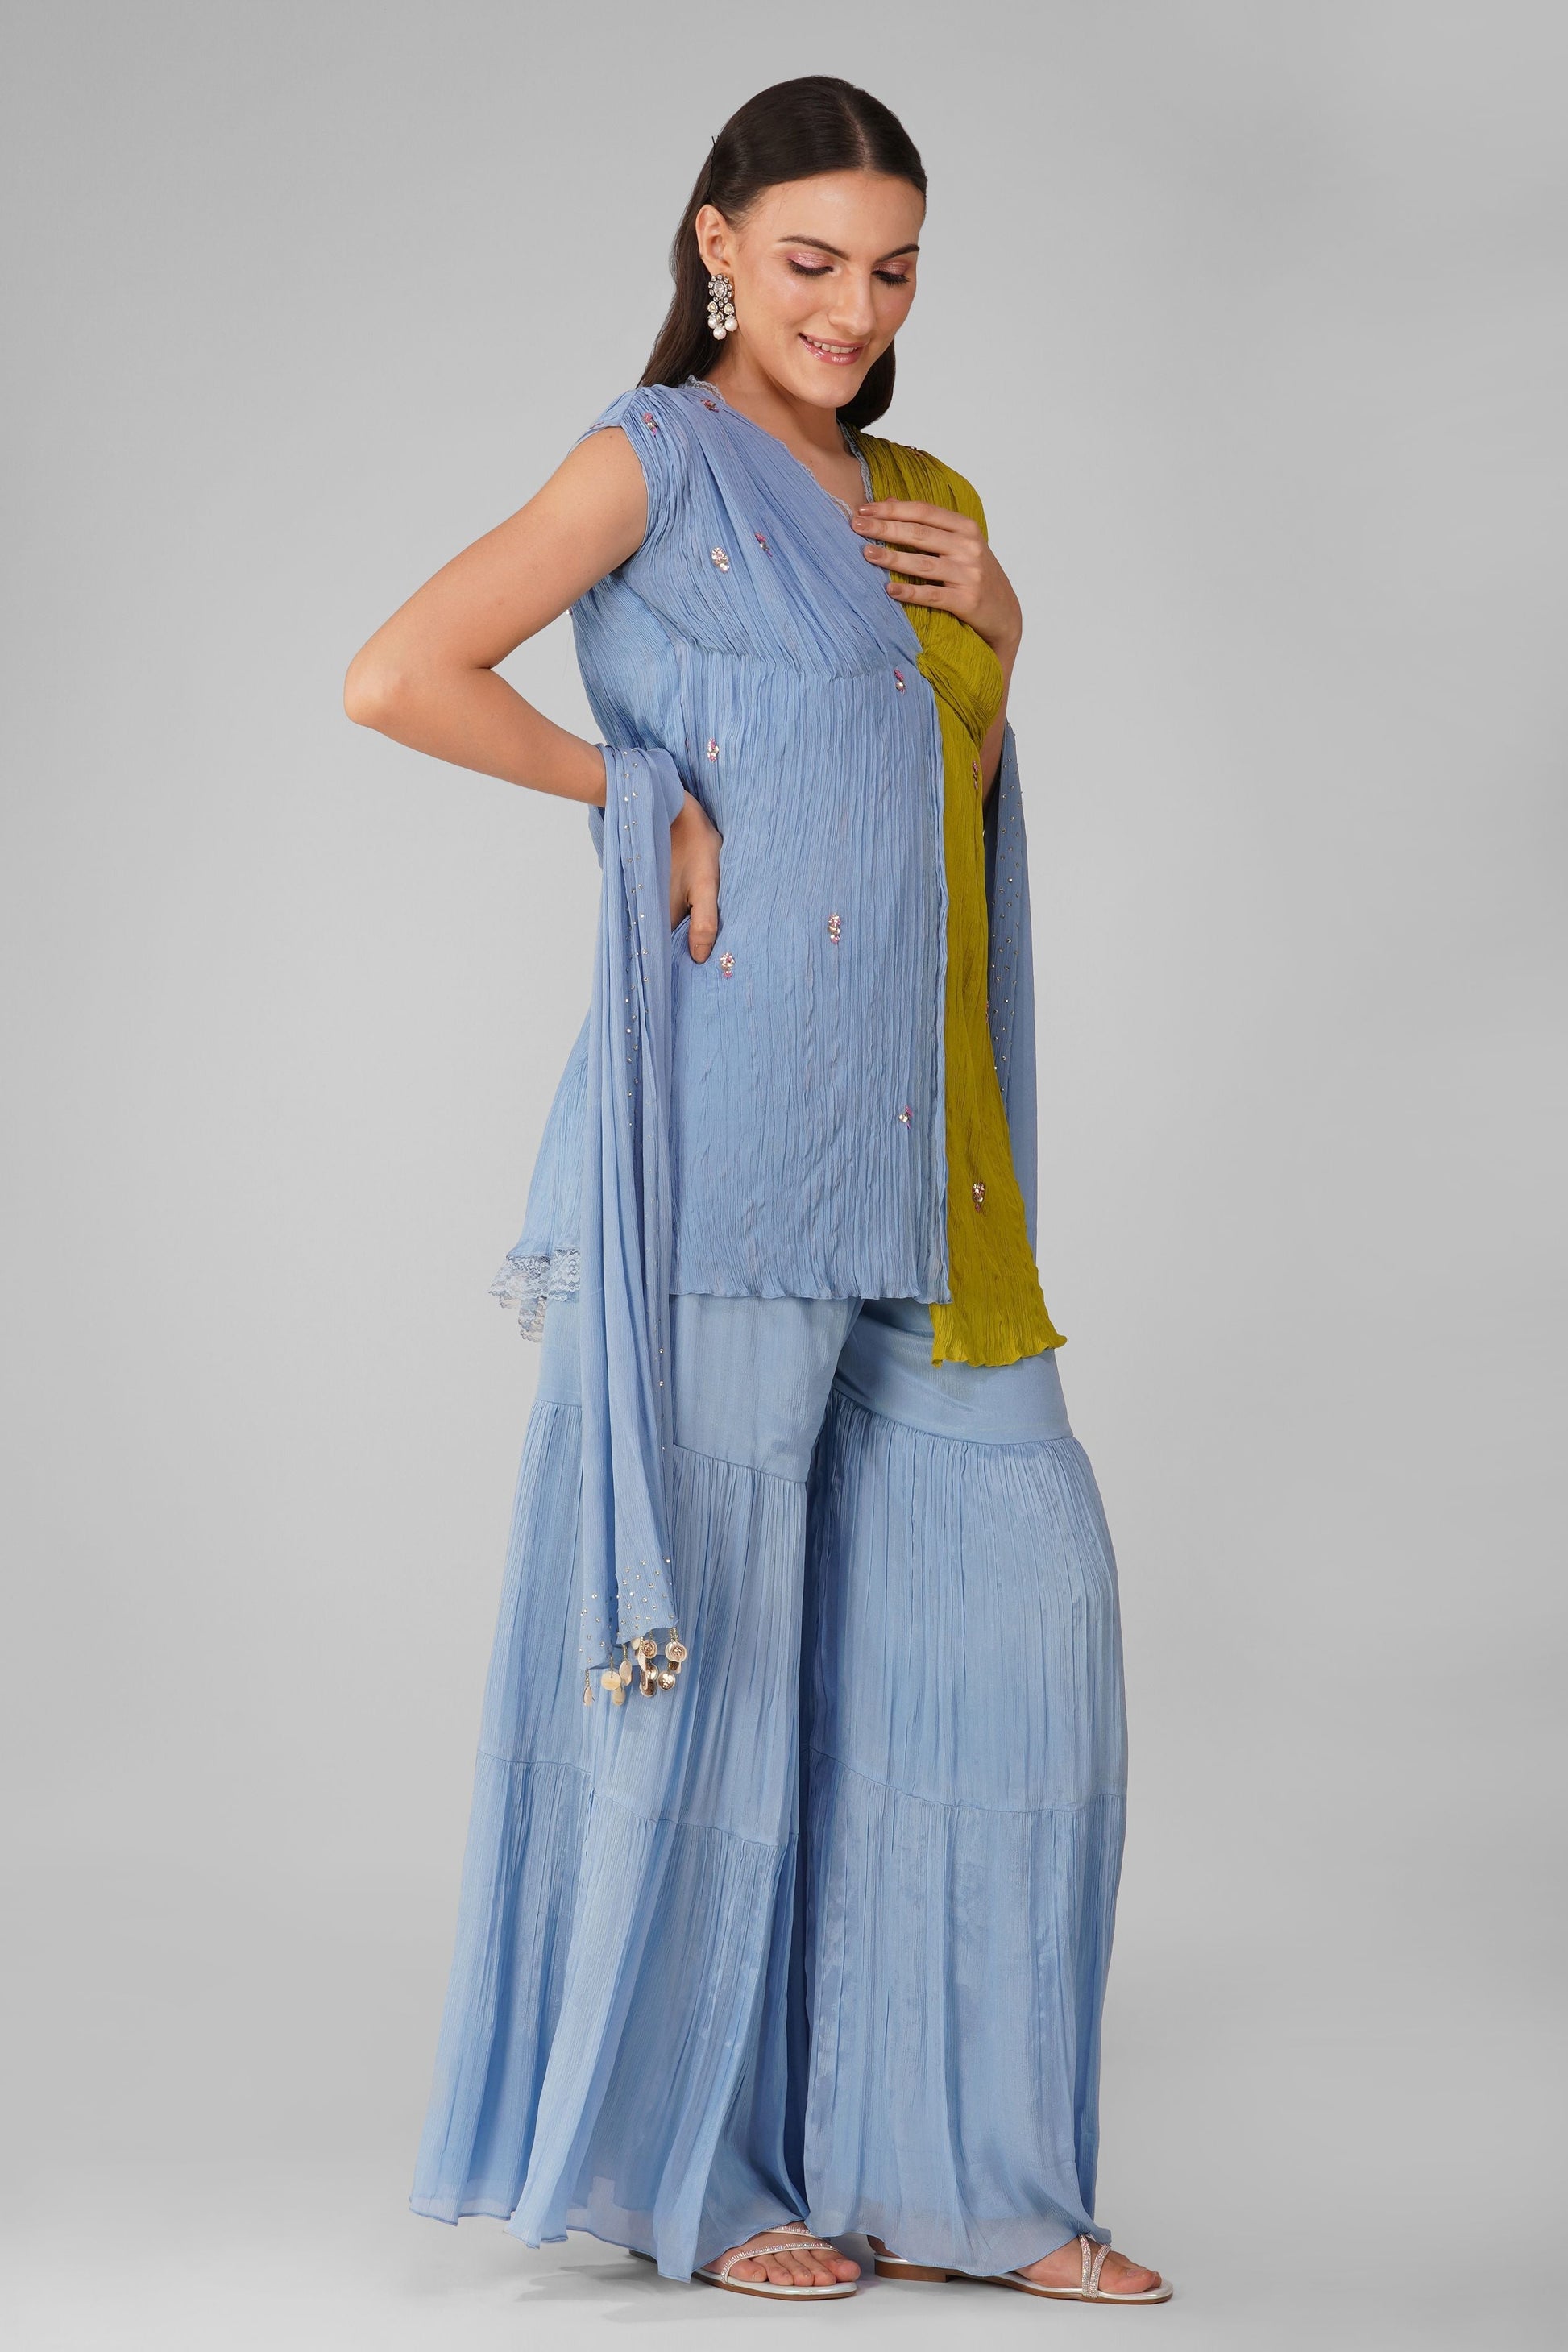 Blue Chiffon Knotted Kurta And Garara Set at Kamakhyaa by Devyani Mehrotra. This item is Blue, Chiffon, Embellished, Indian Wear, Natural, Party Wear, Regular Fit, Womenswear